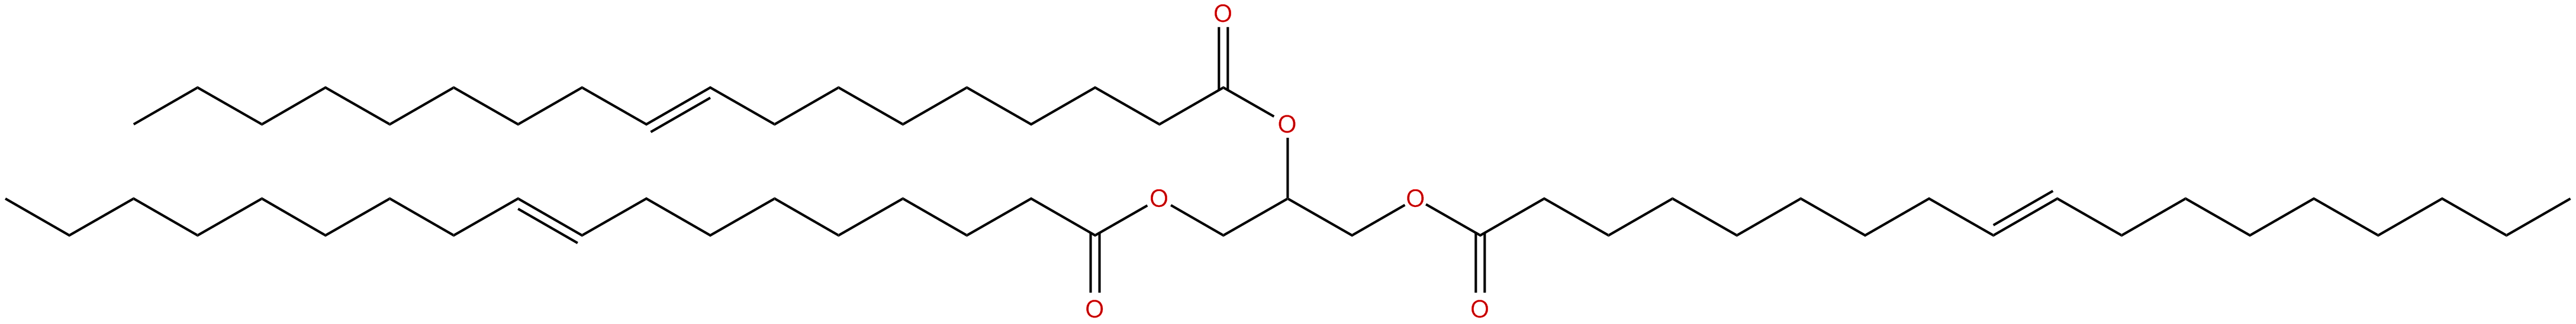 Image of trielaidin